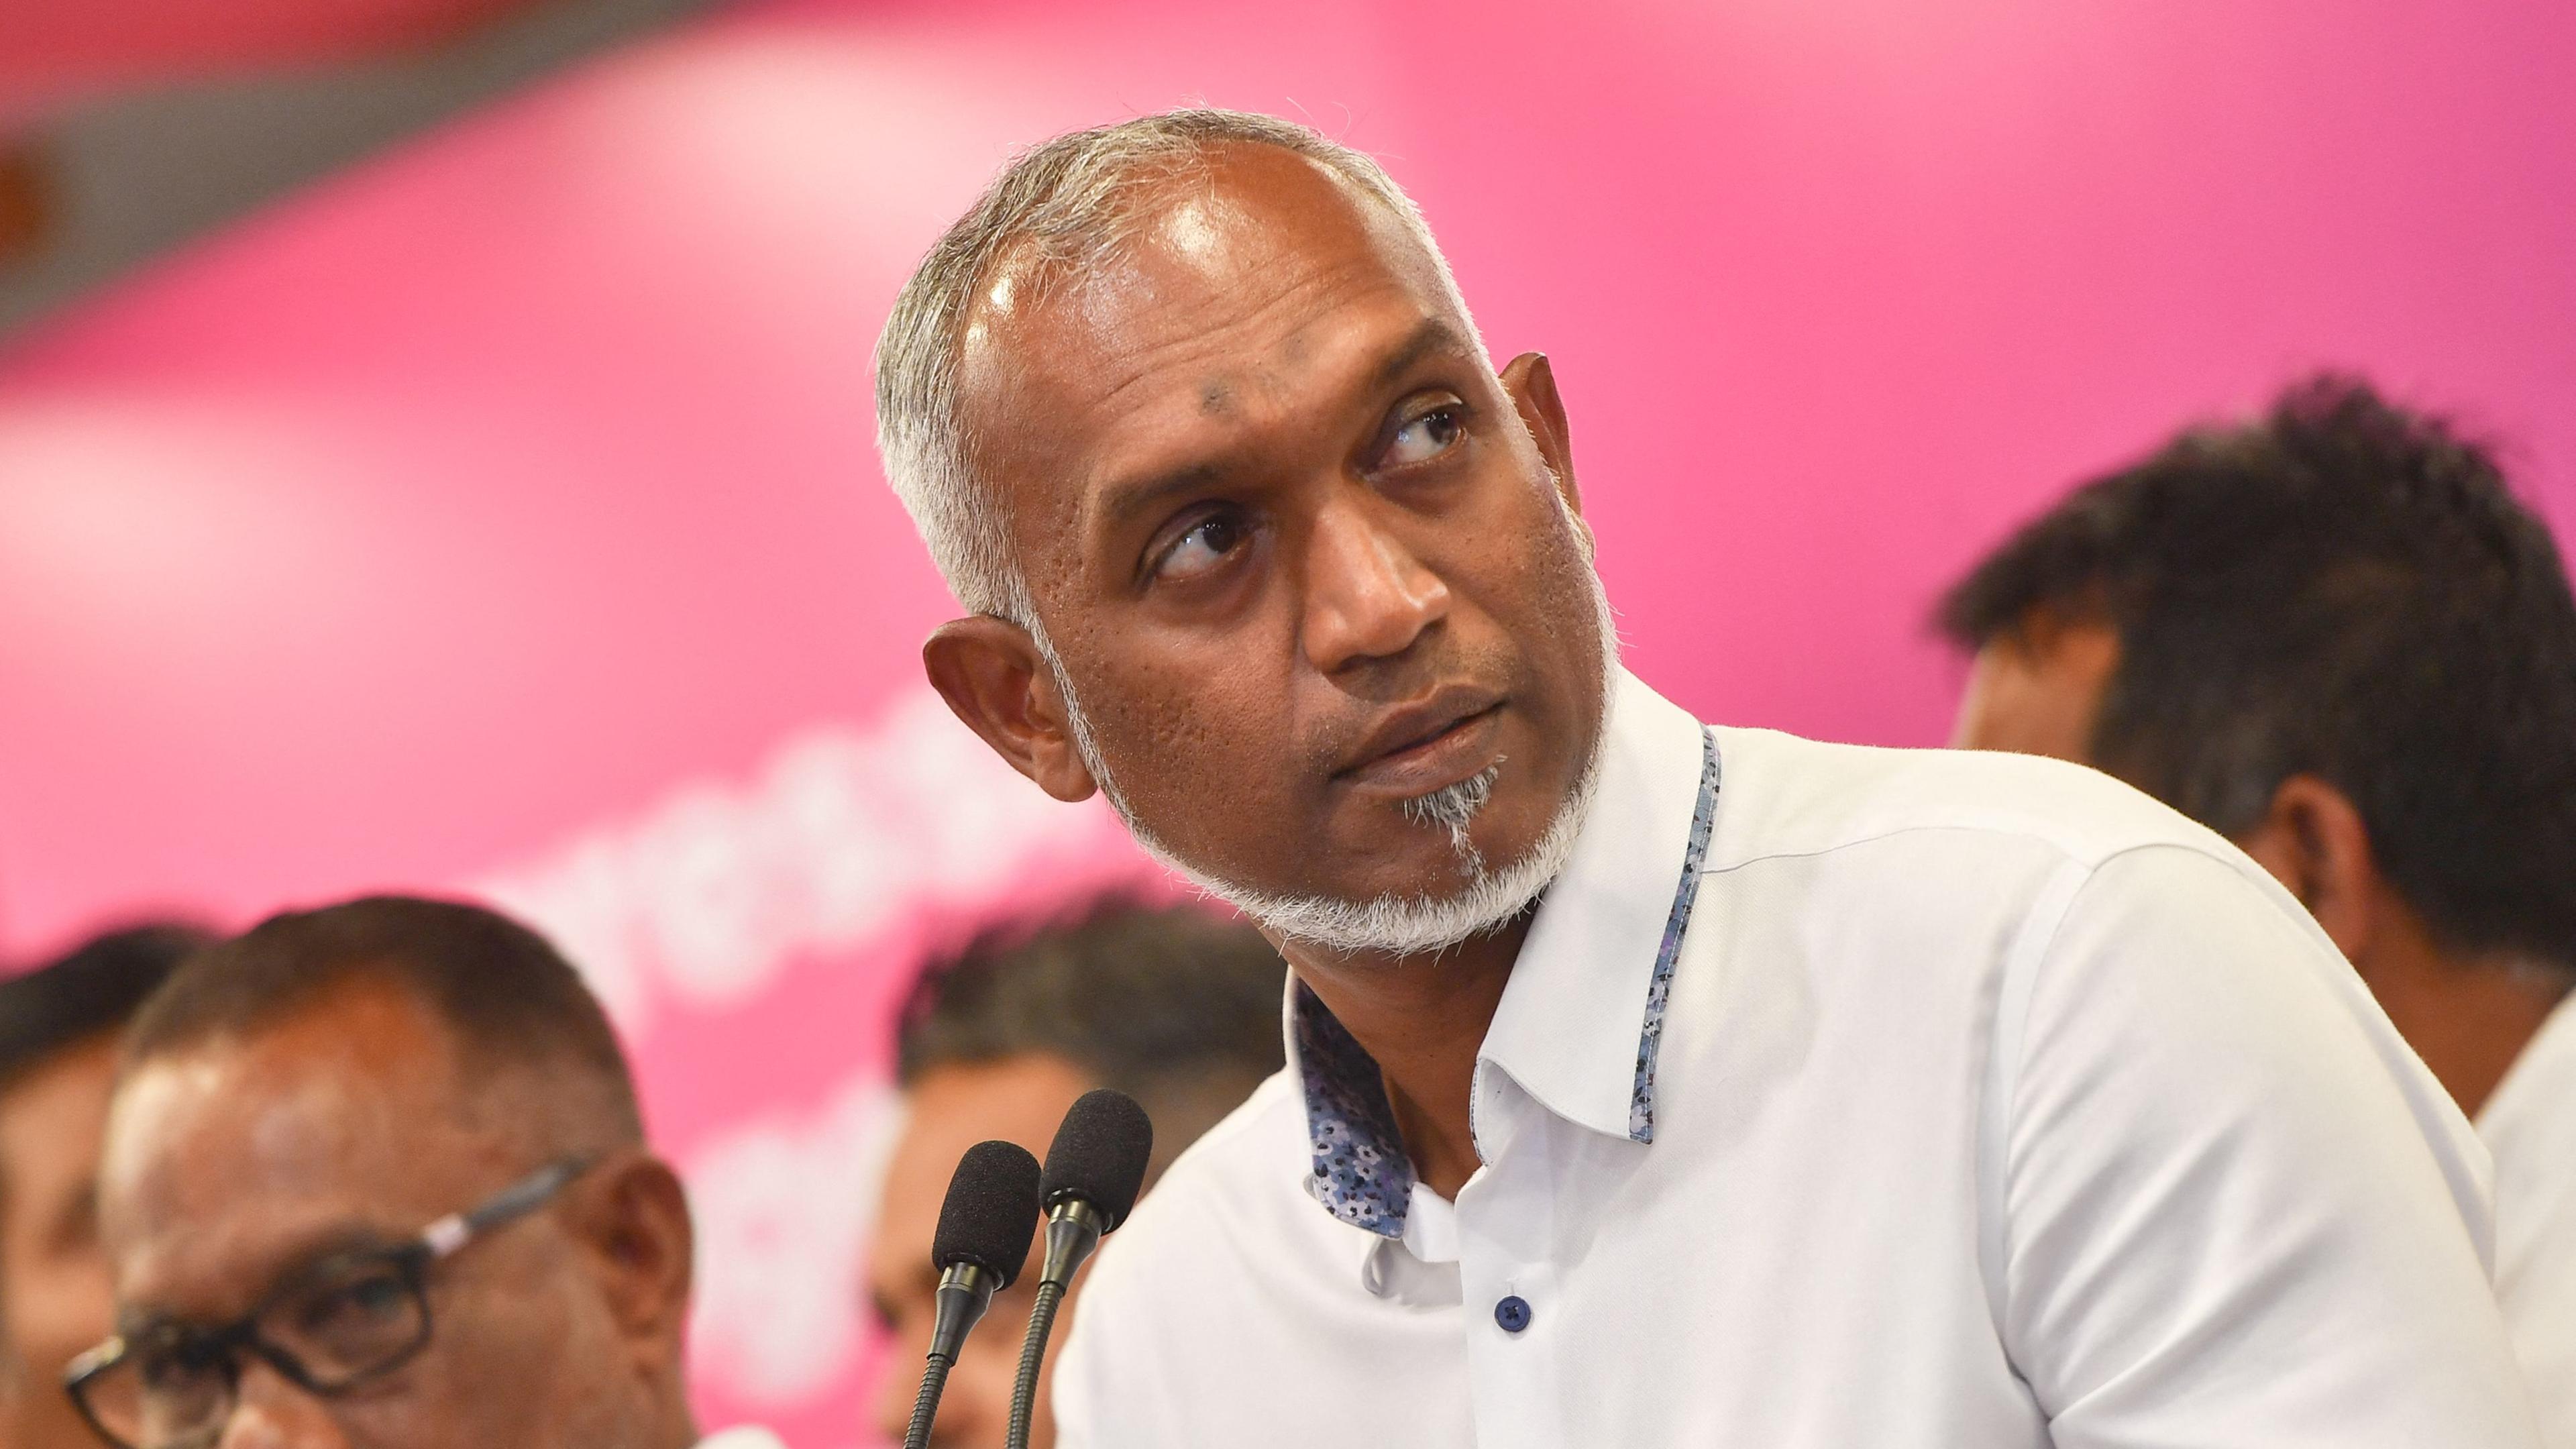 Mohamed Muizzu vor rosafarbenem Hintergrund